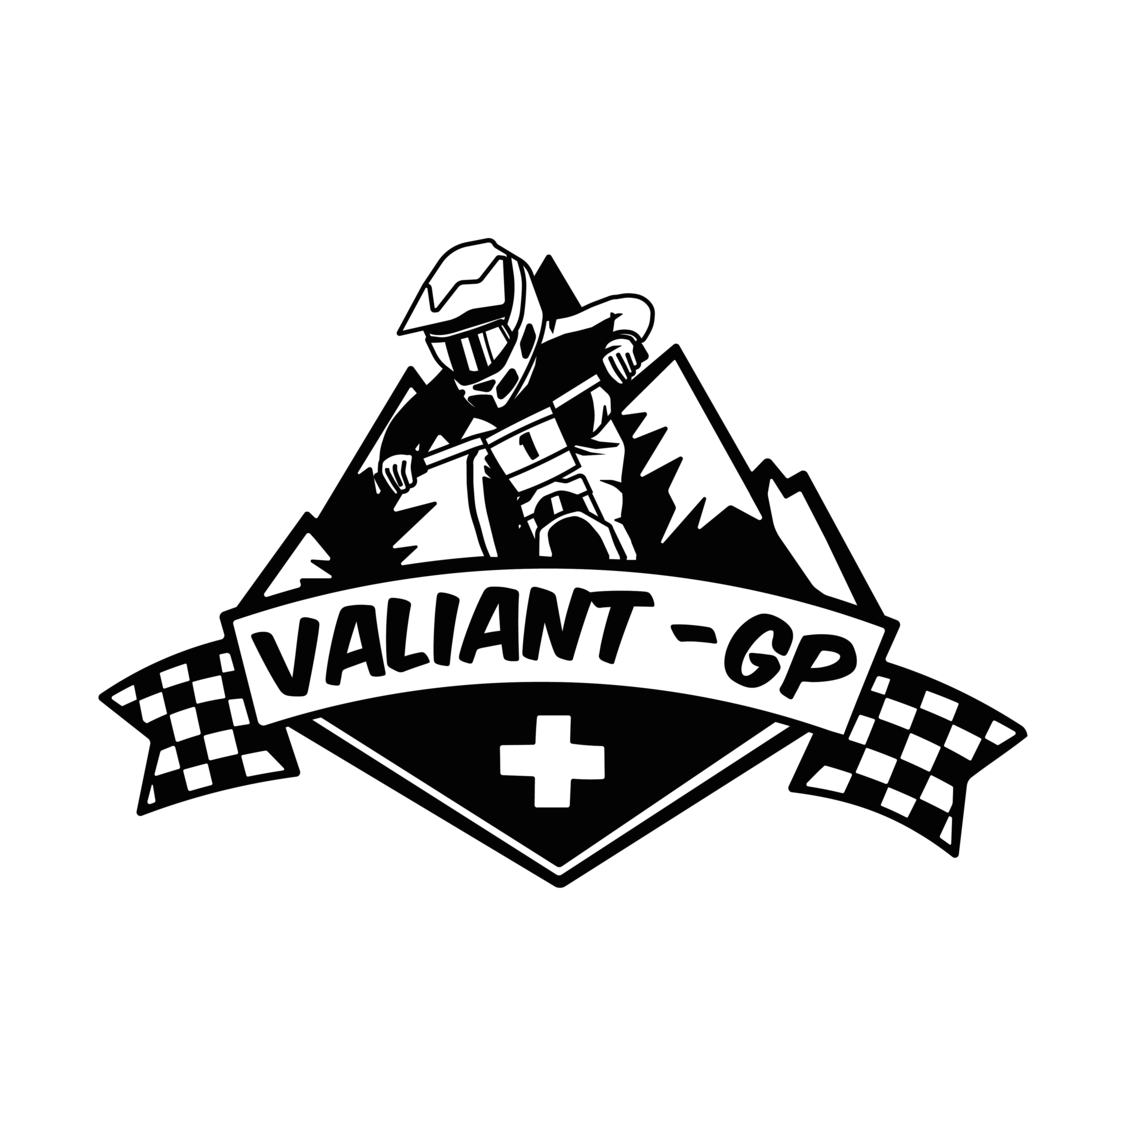 valliant-gp_logo_schwarz_weiss.png